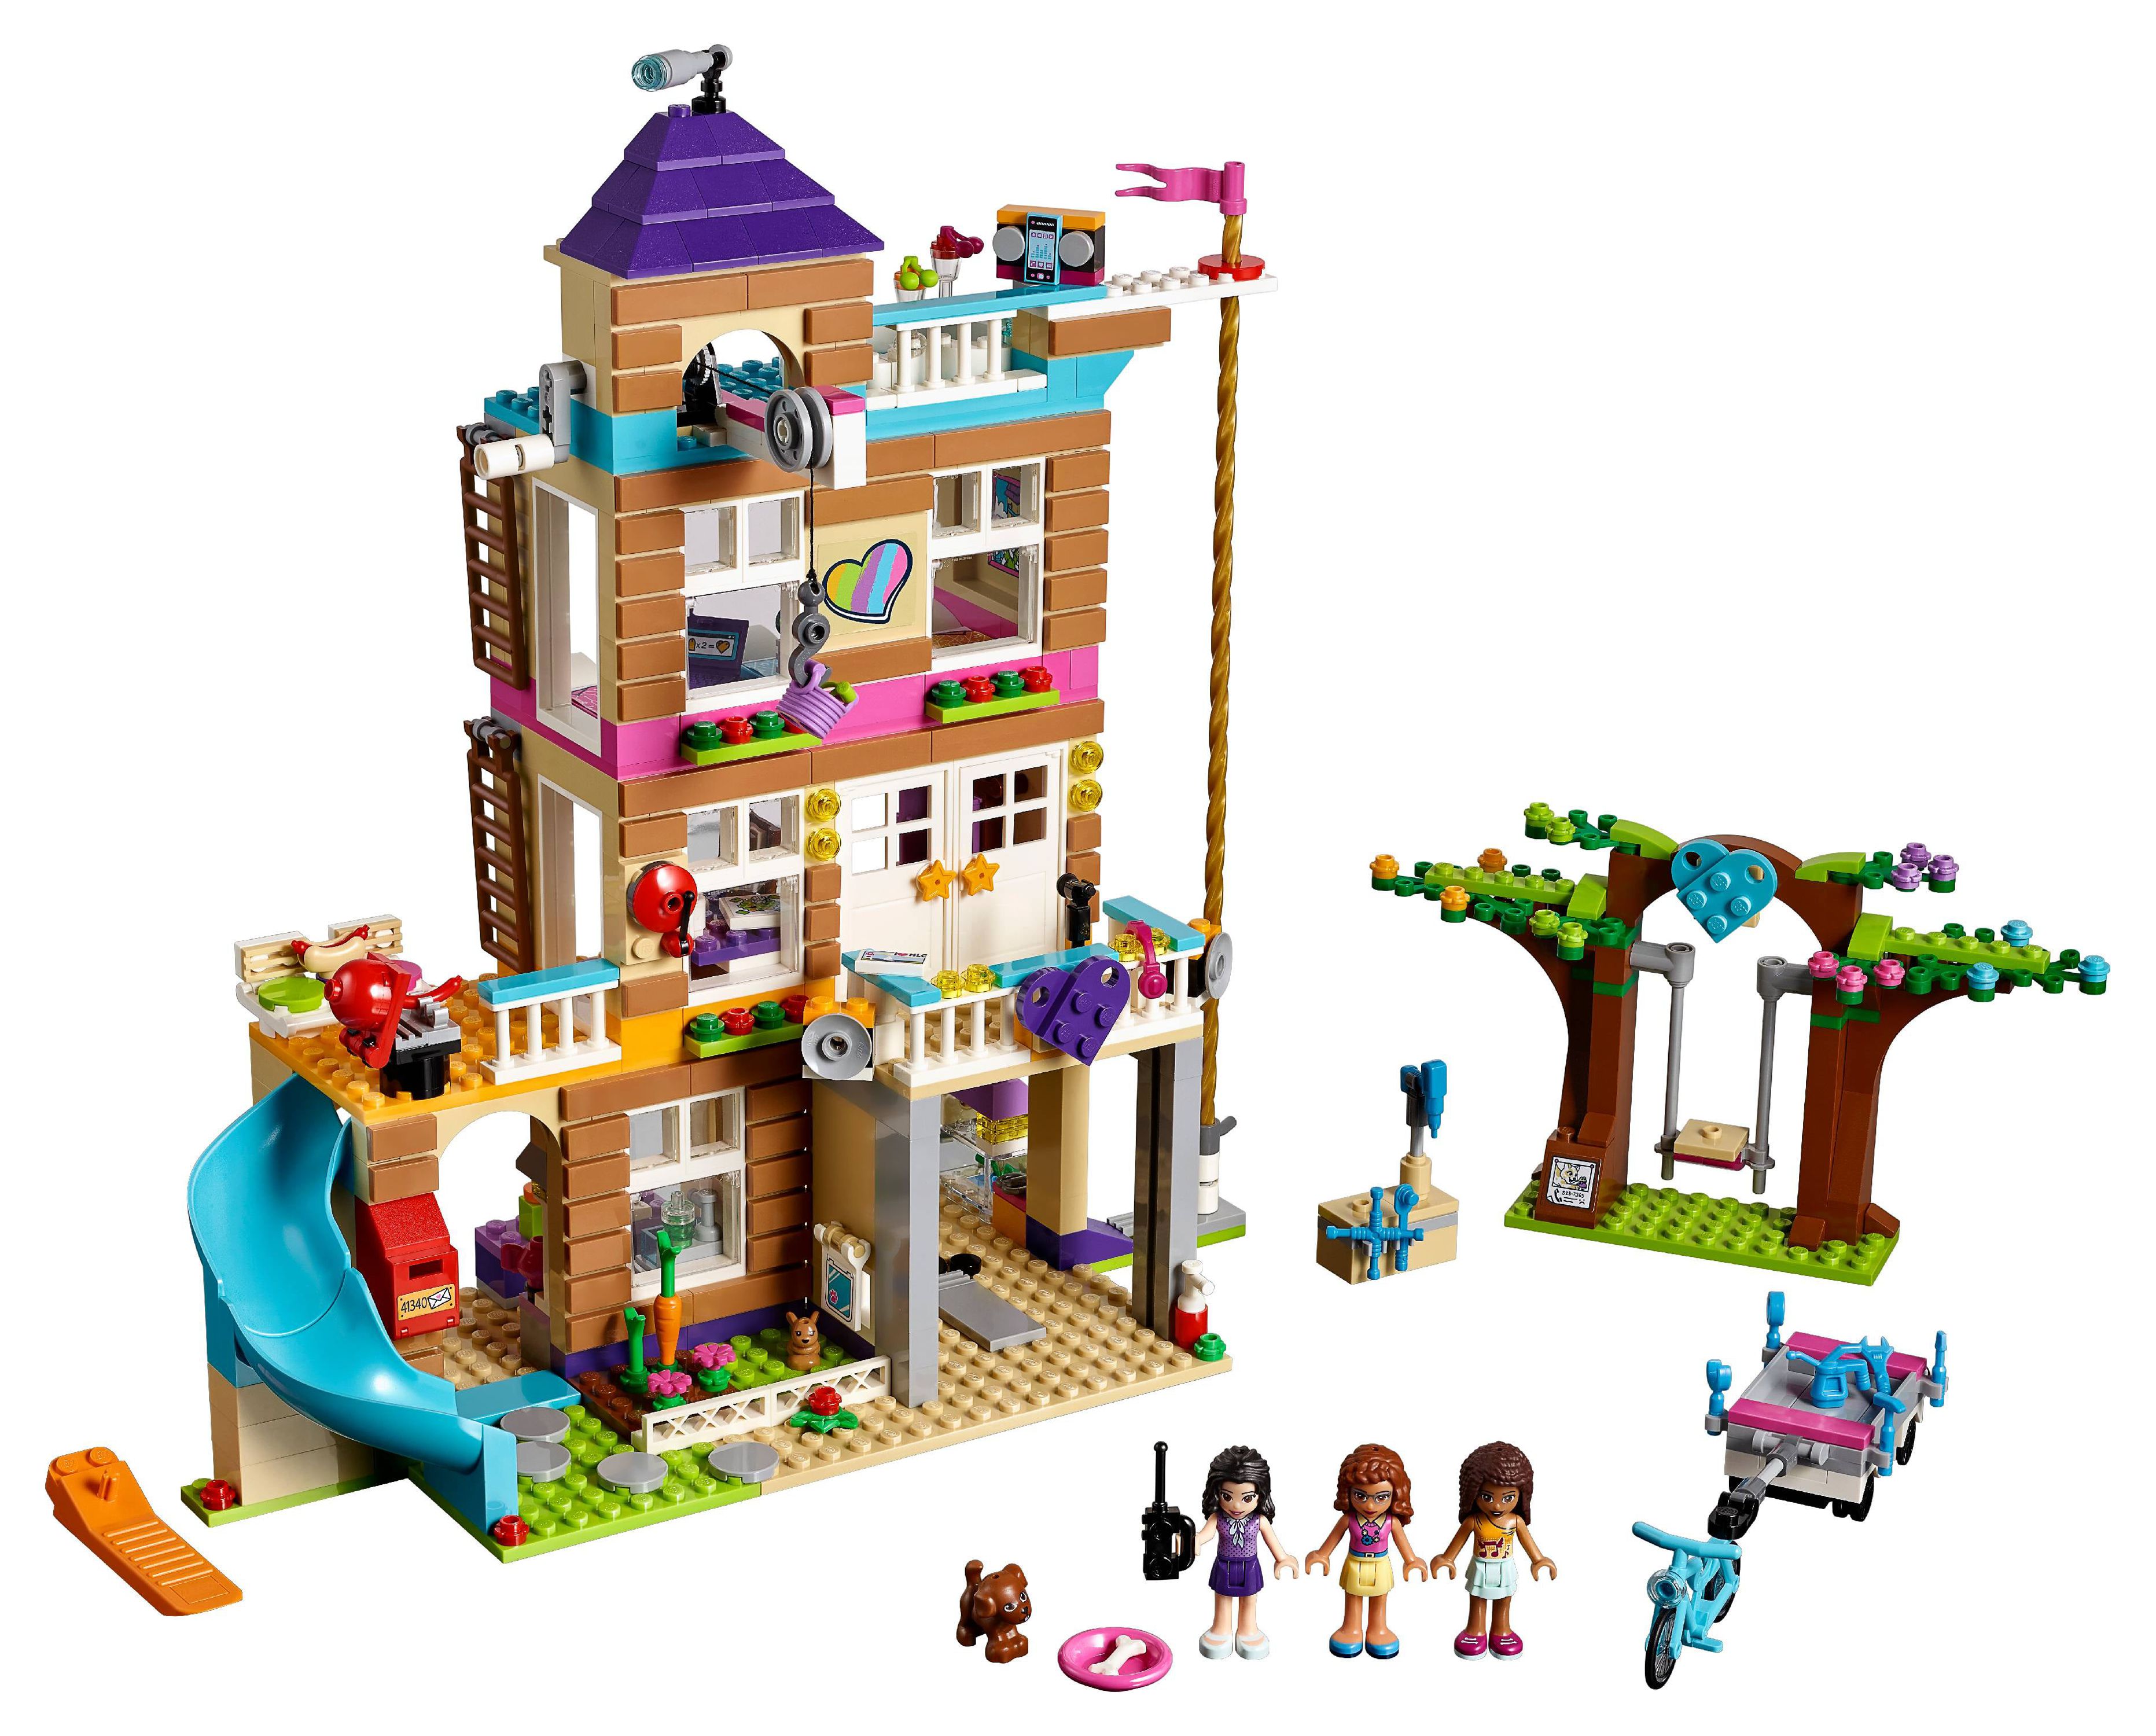 LEGO Friends Friendship House 41340 4-Story Building Set (722 Pieces) - image 3 of 8